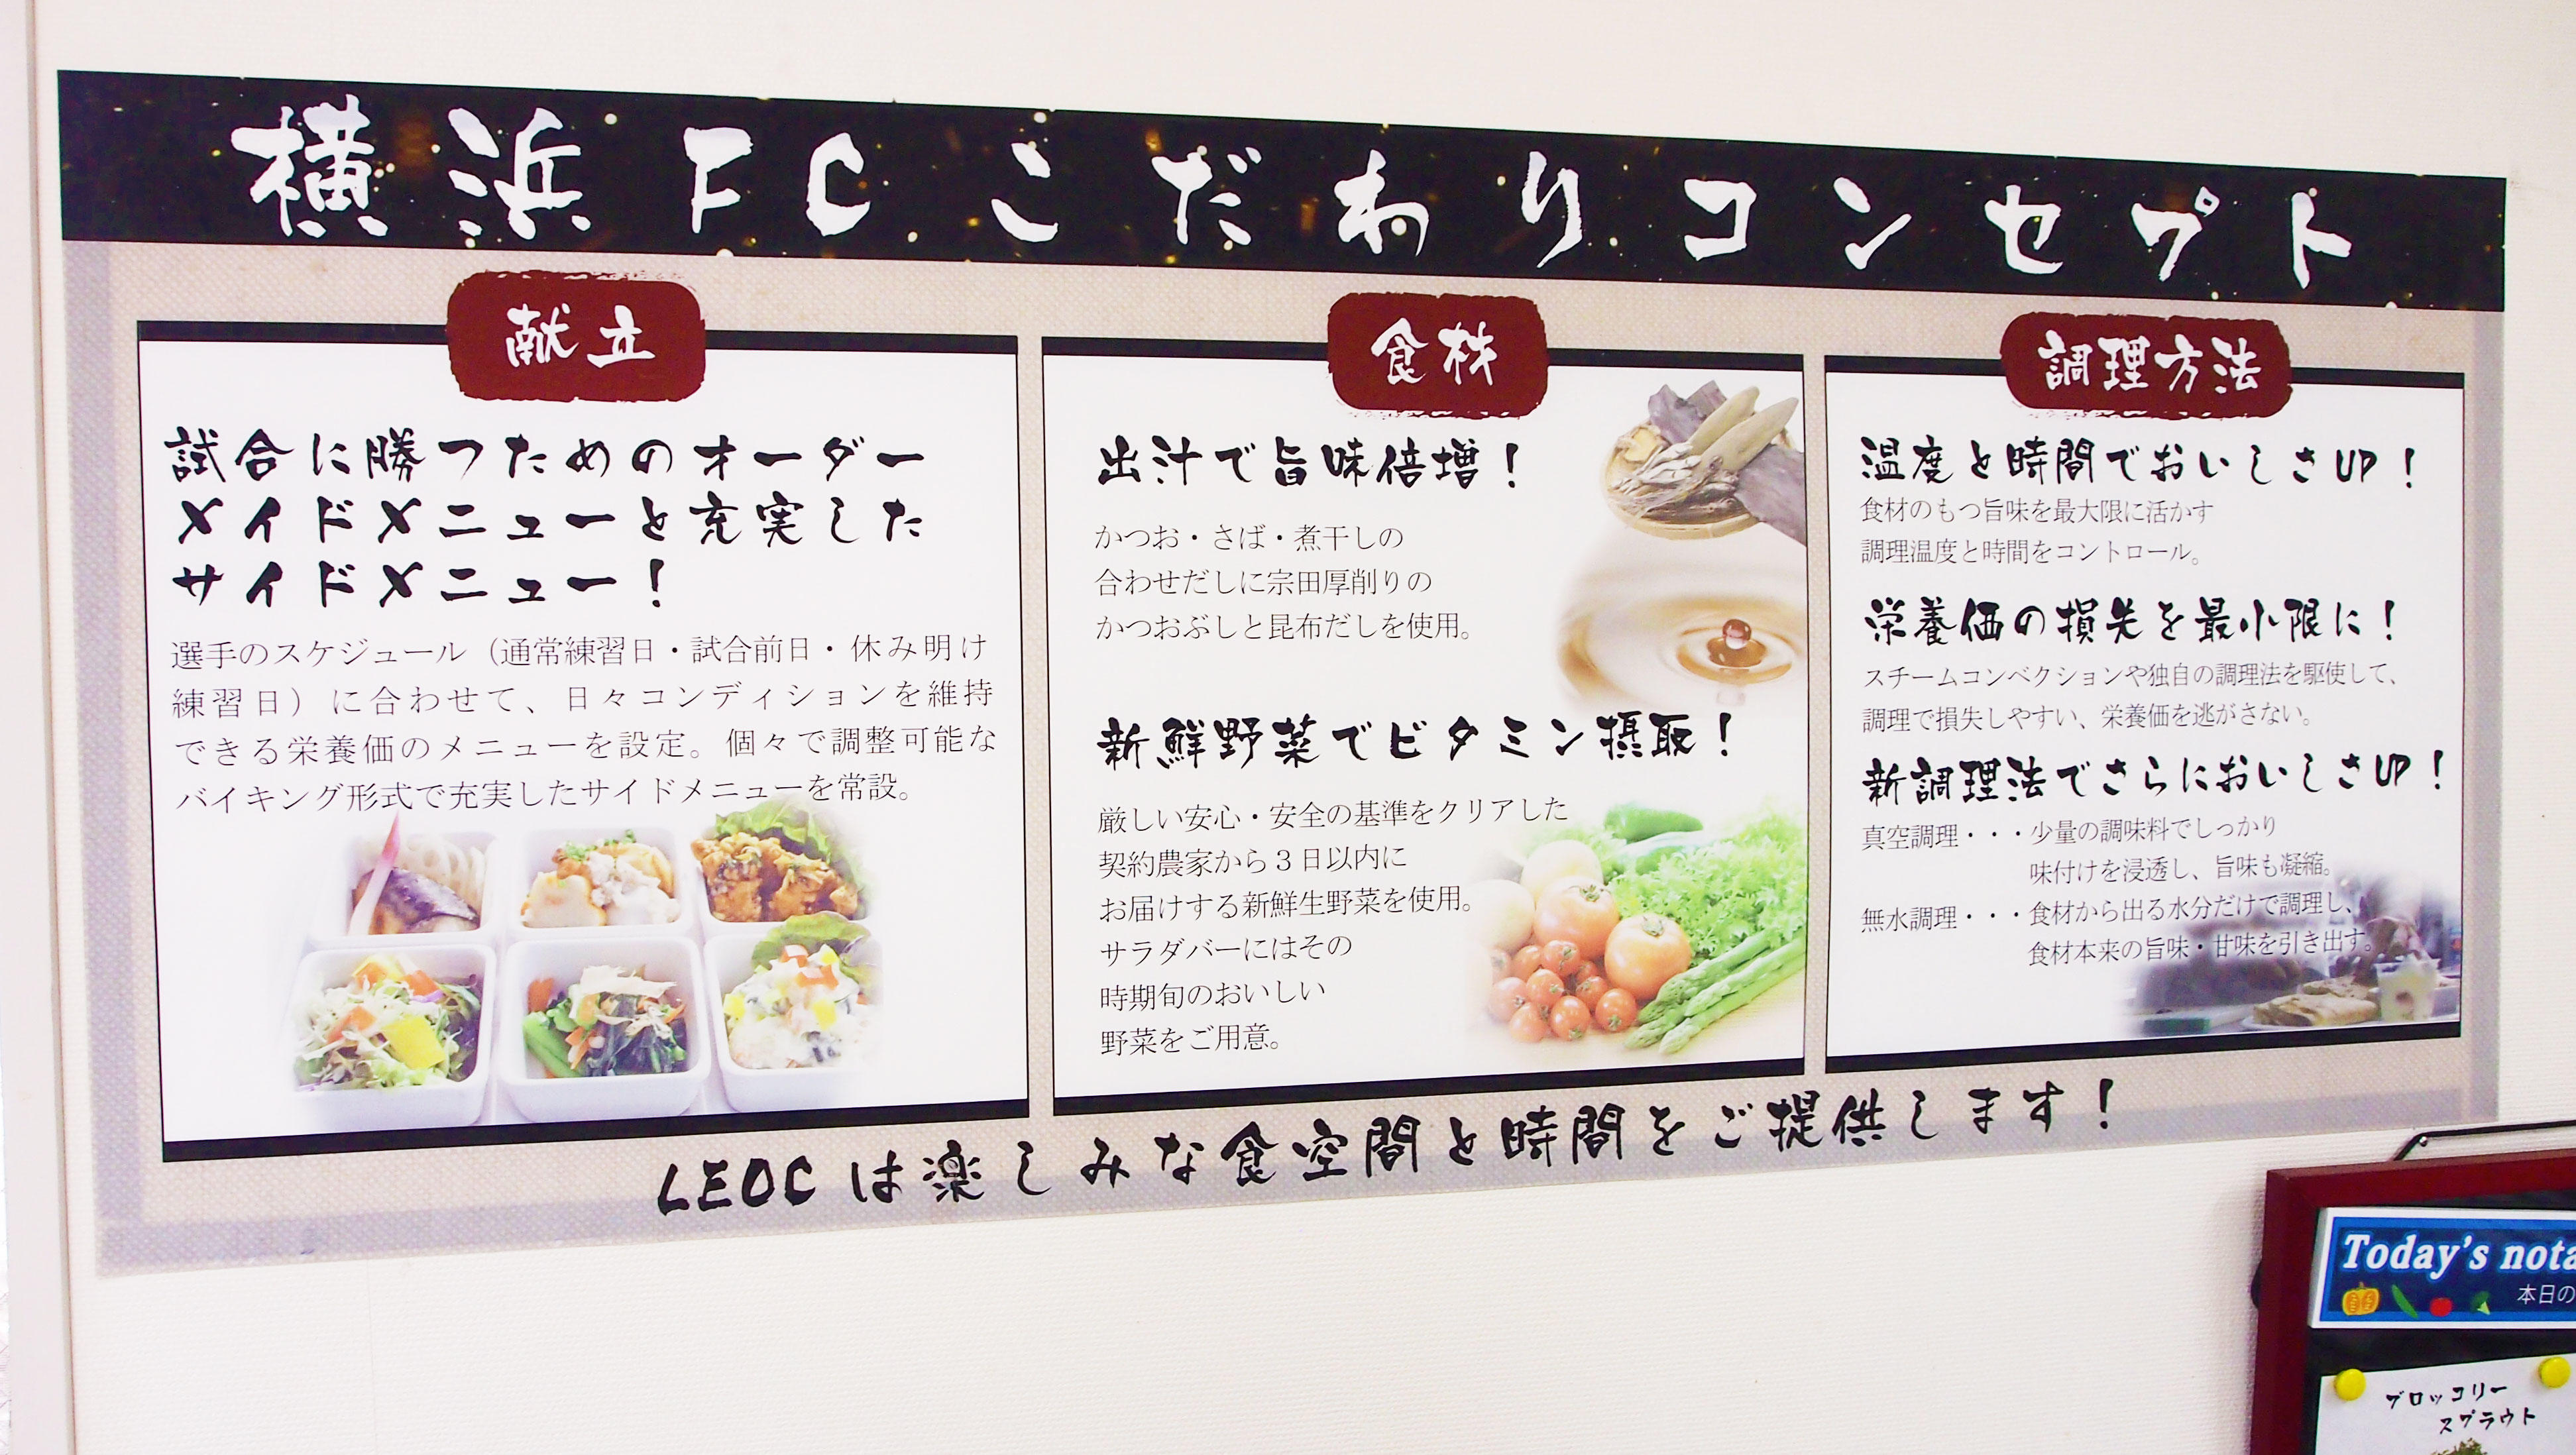 LEOC食堂「横浜FCこだわりコンセプト」